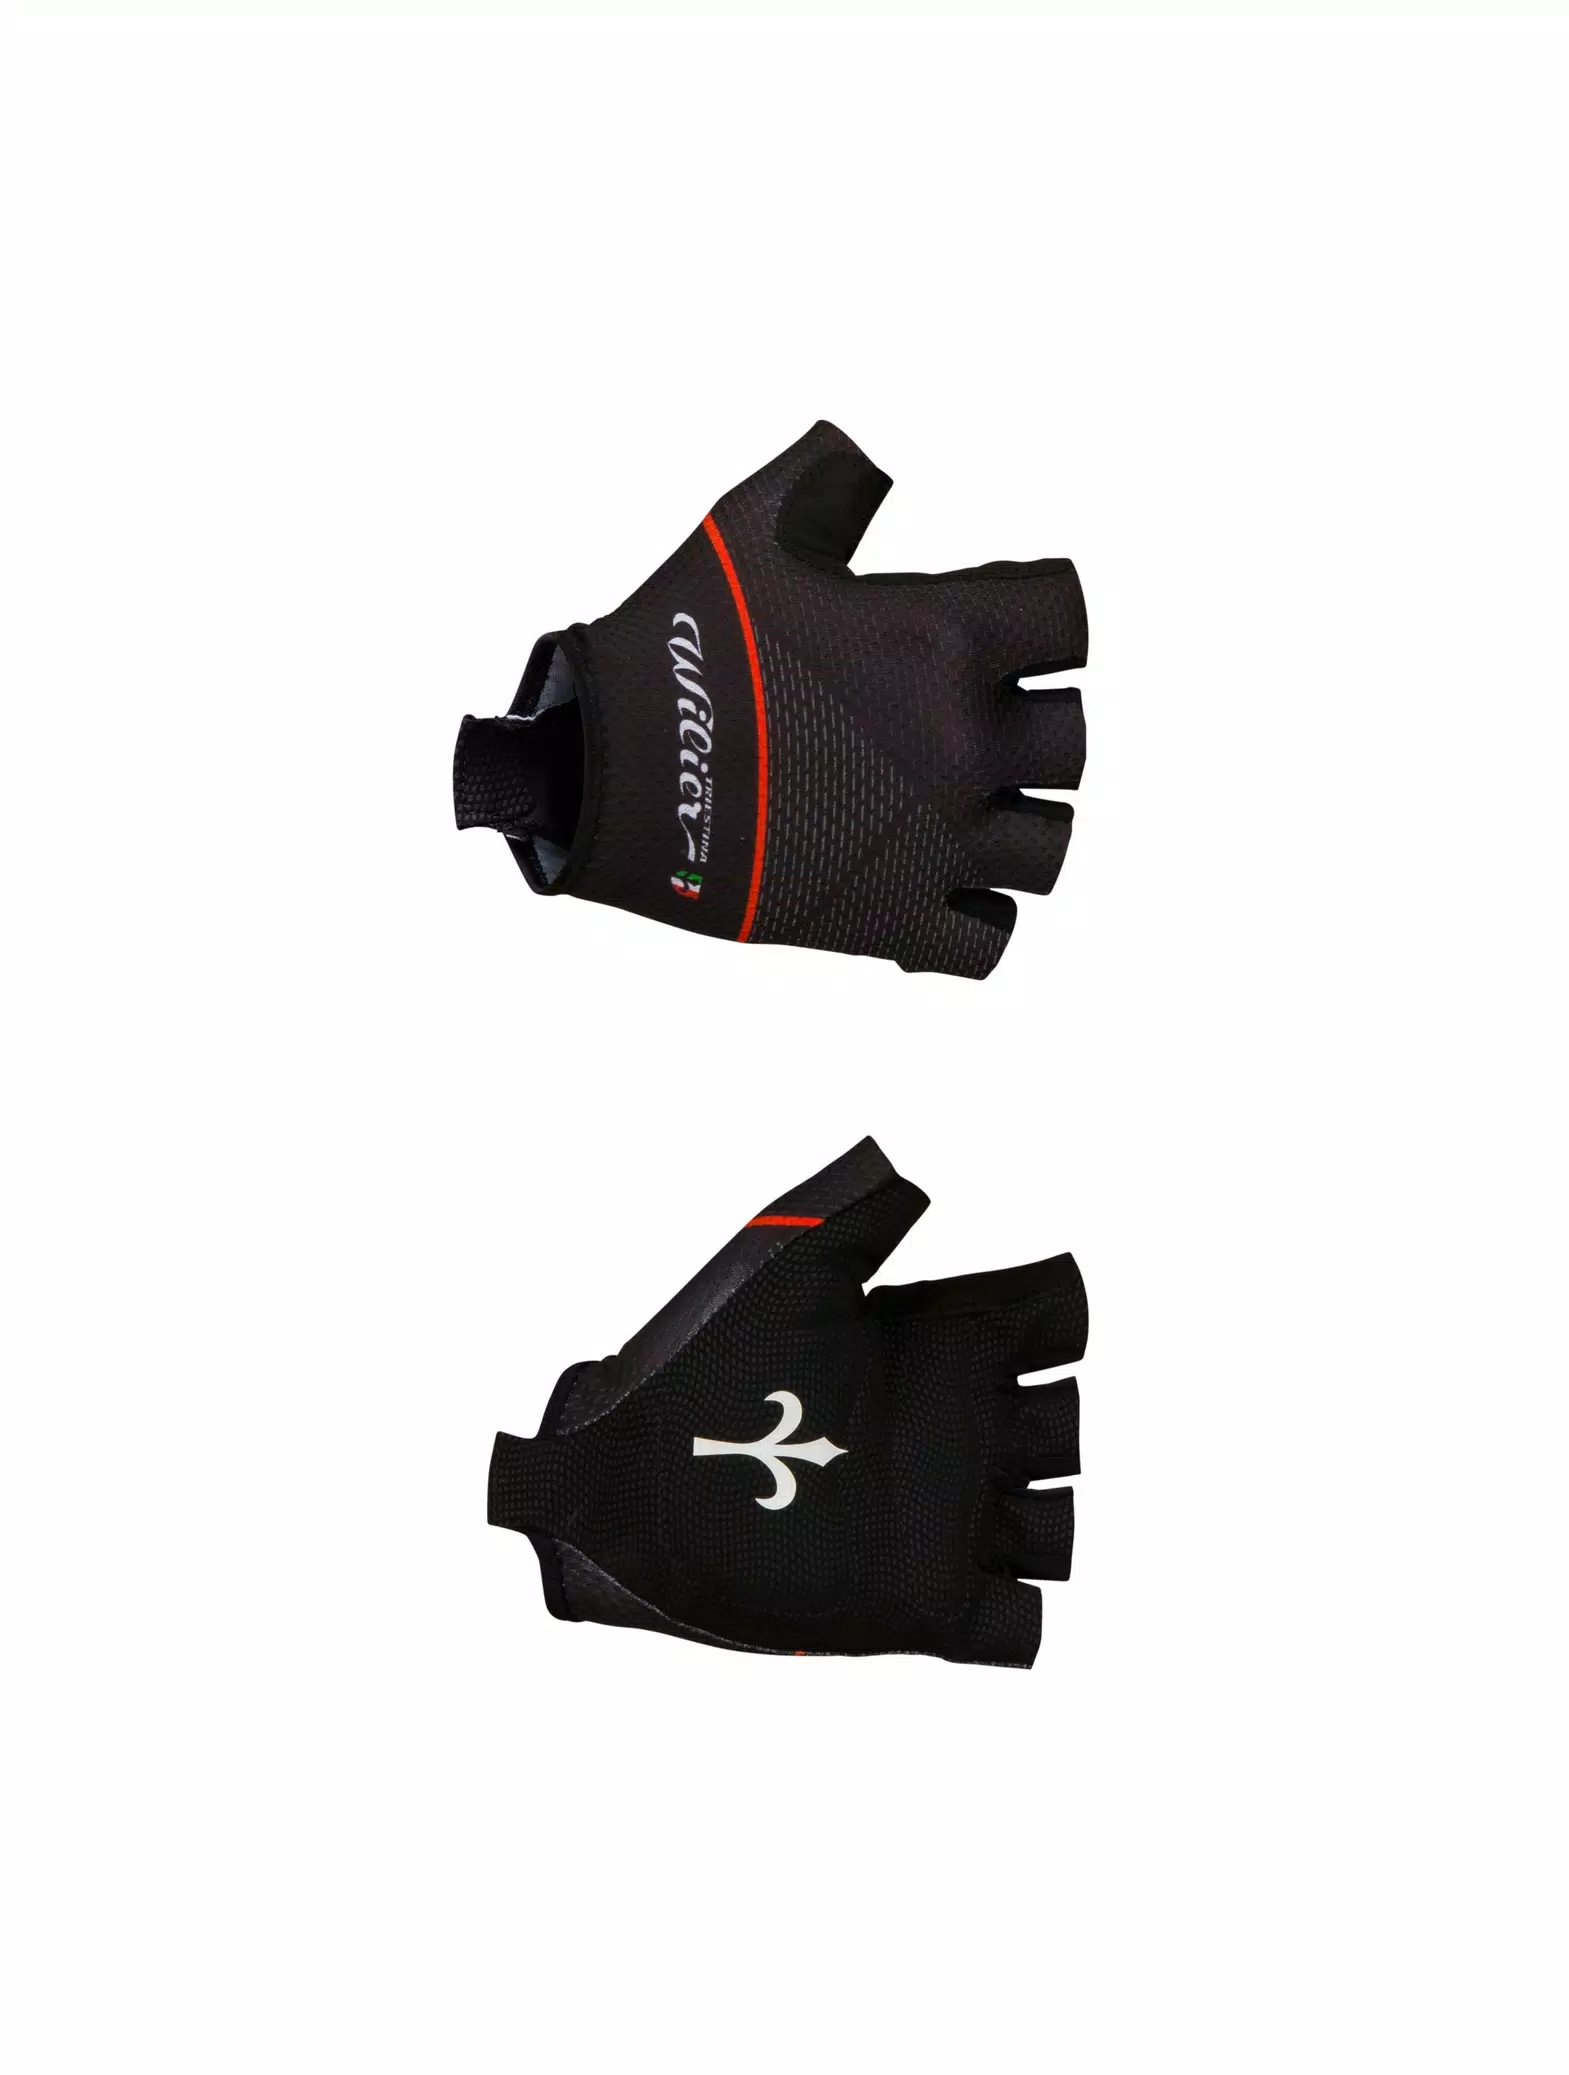 Brave Gloves black